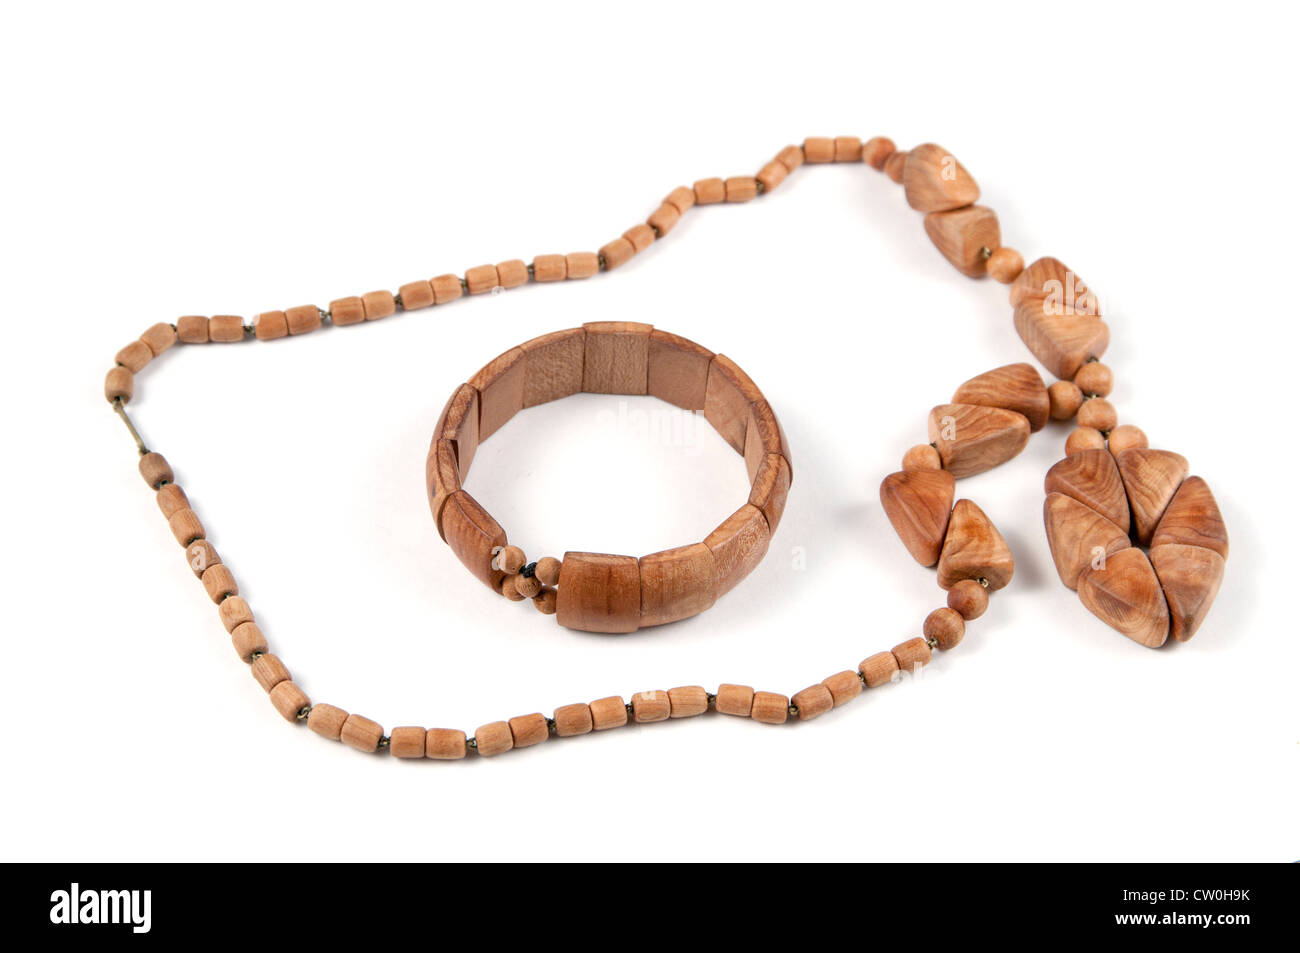 Wooden costume jewellery - beads and bracelet Stock Photo - Alamy